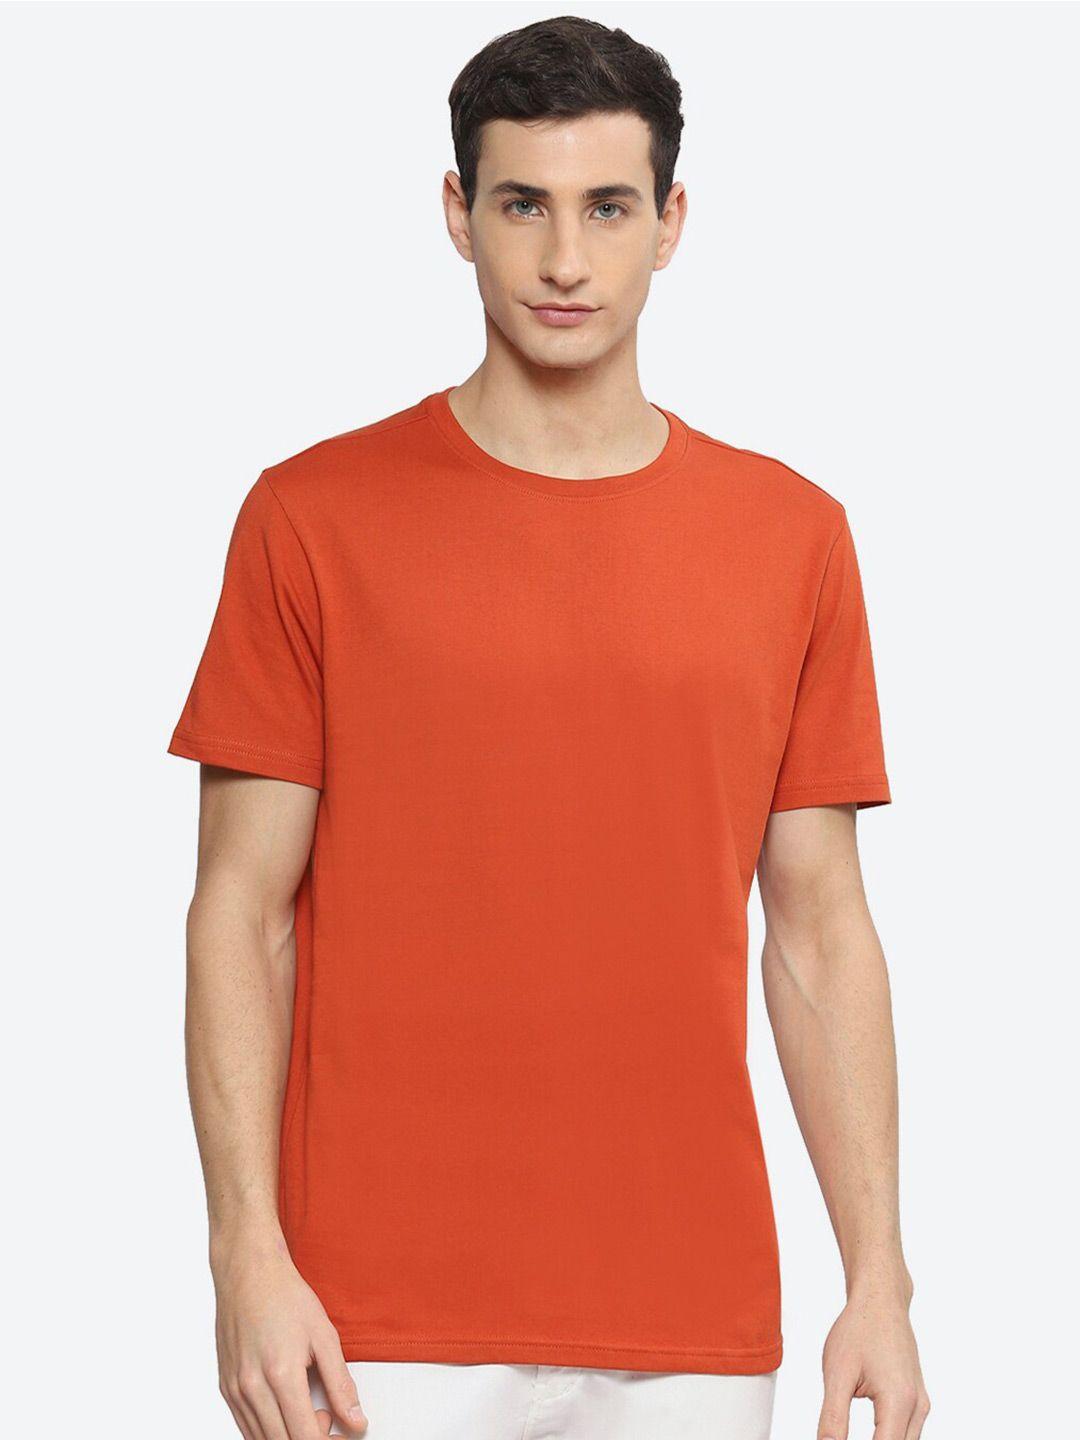 2bme round neck short sleeves cotton t-shirt